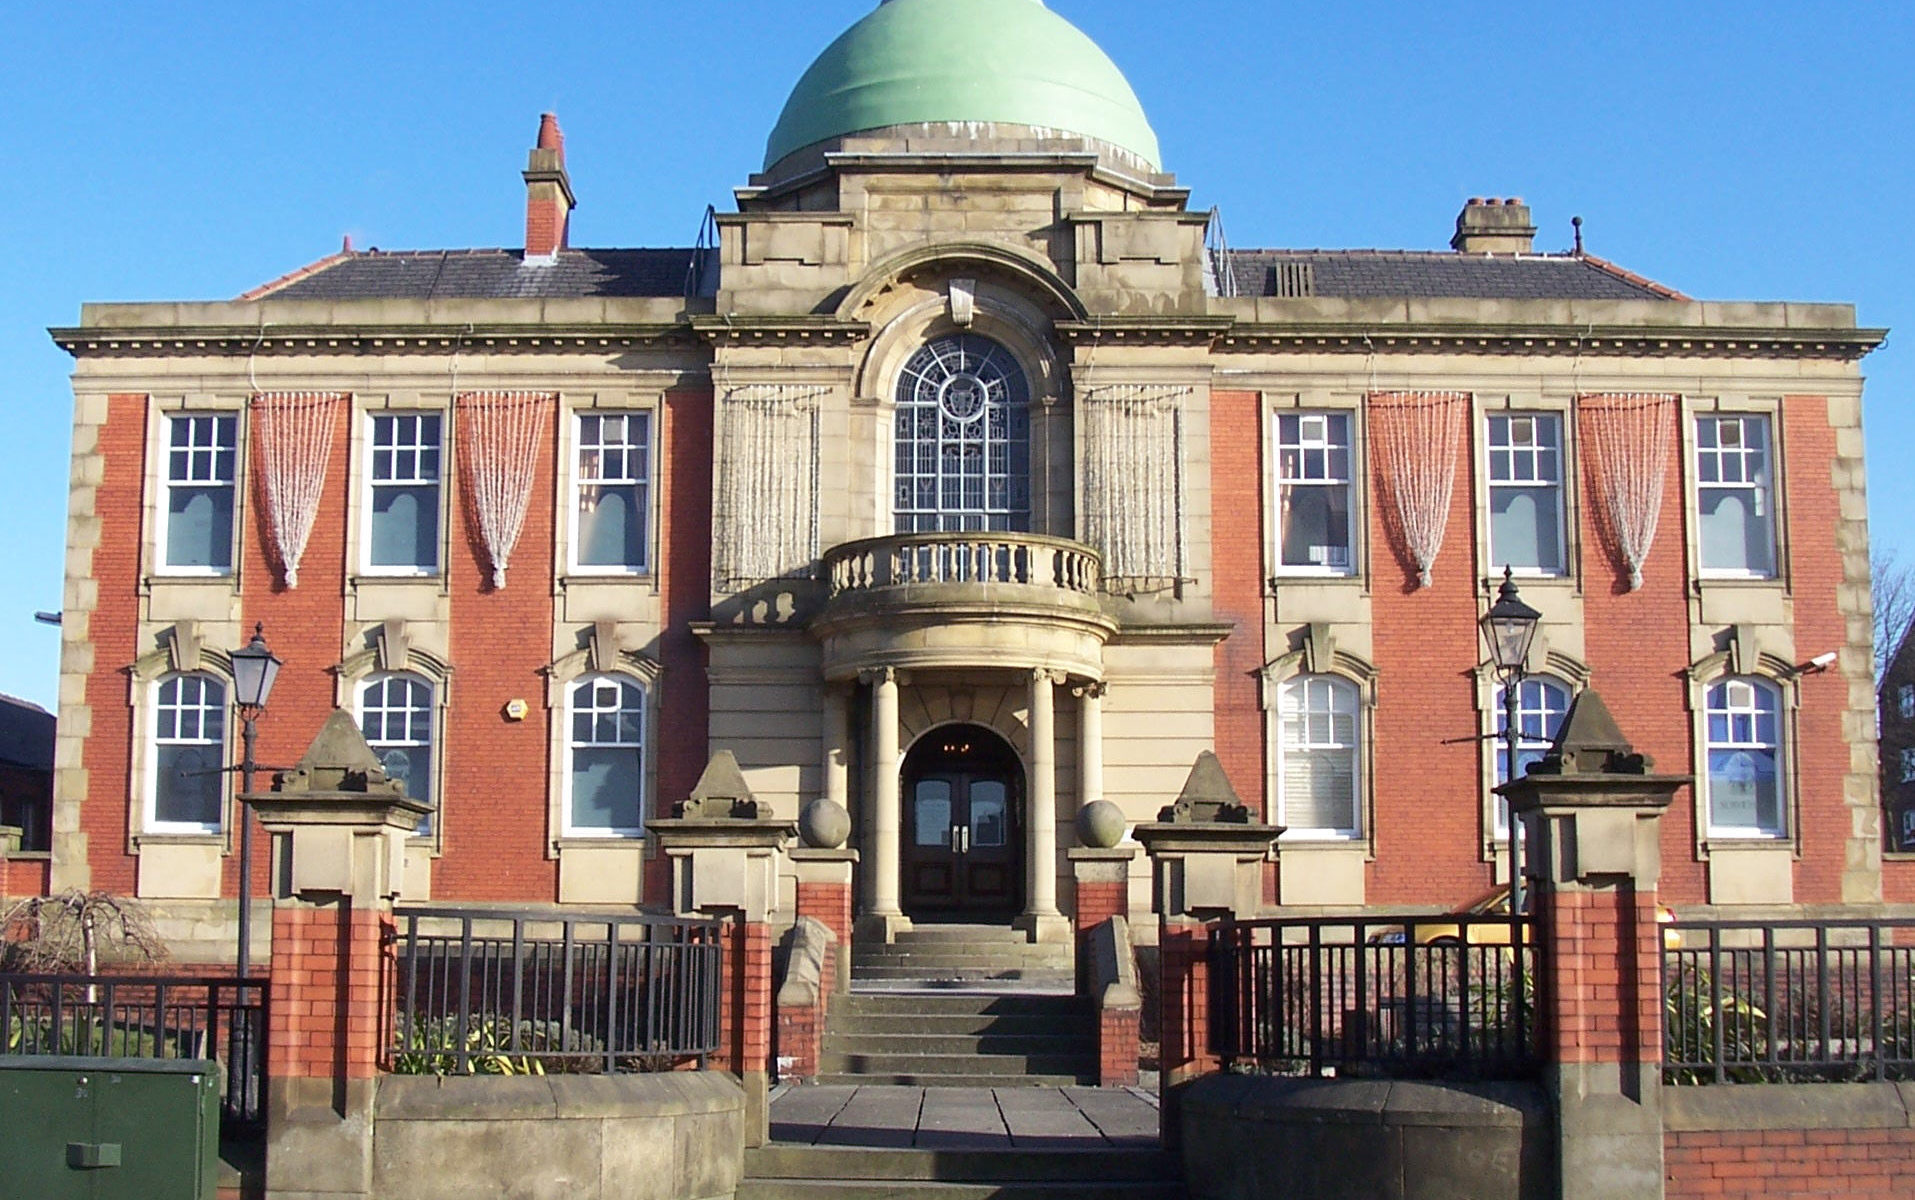 Chadderton Town Hall – The Queen Elizabeth Hall